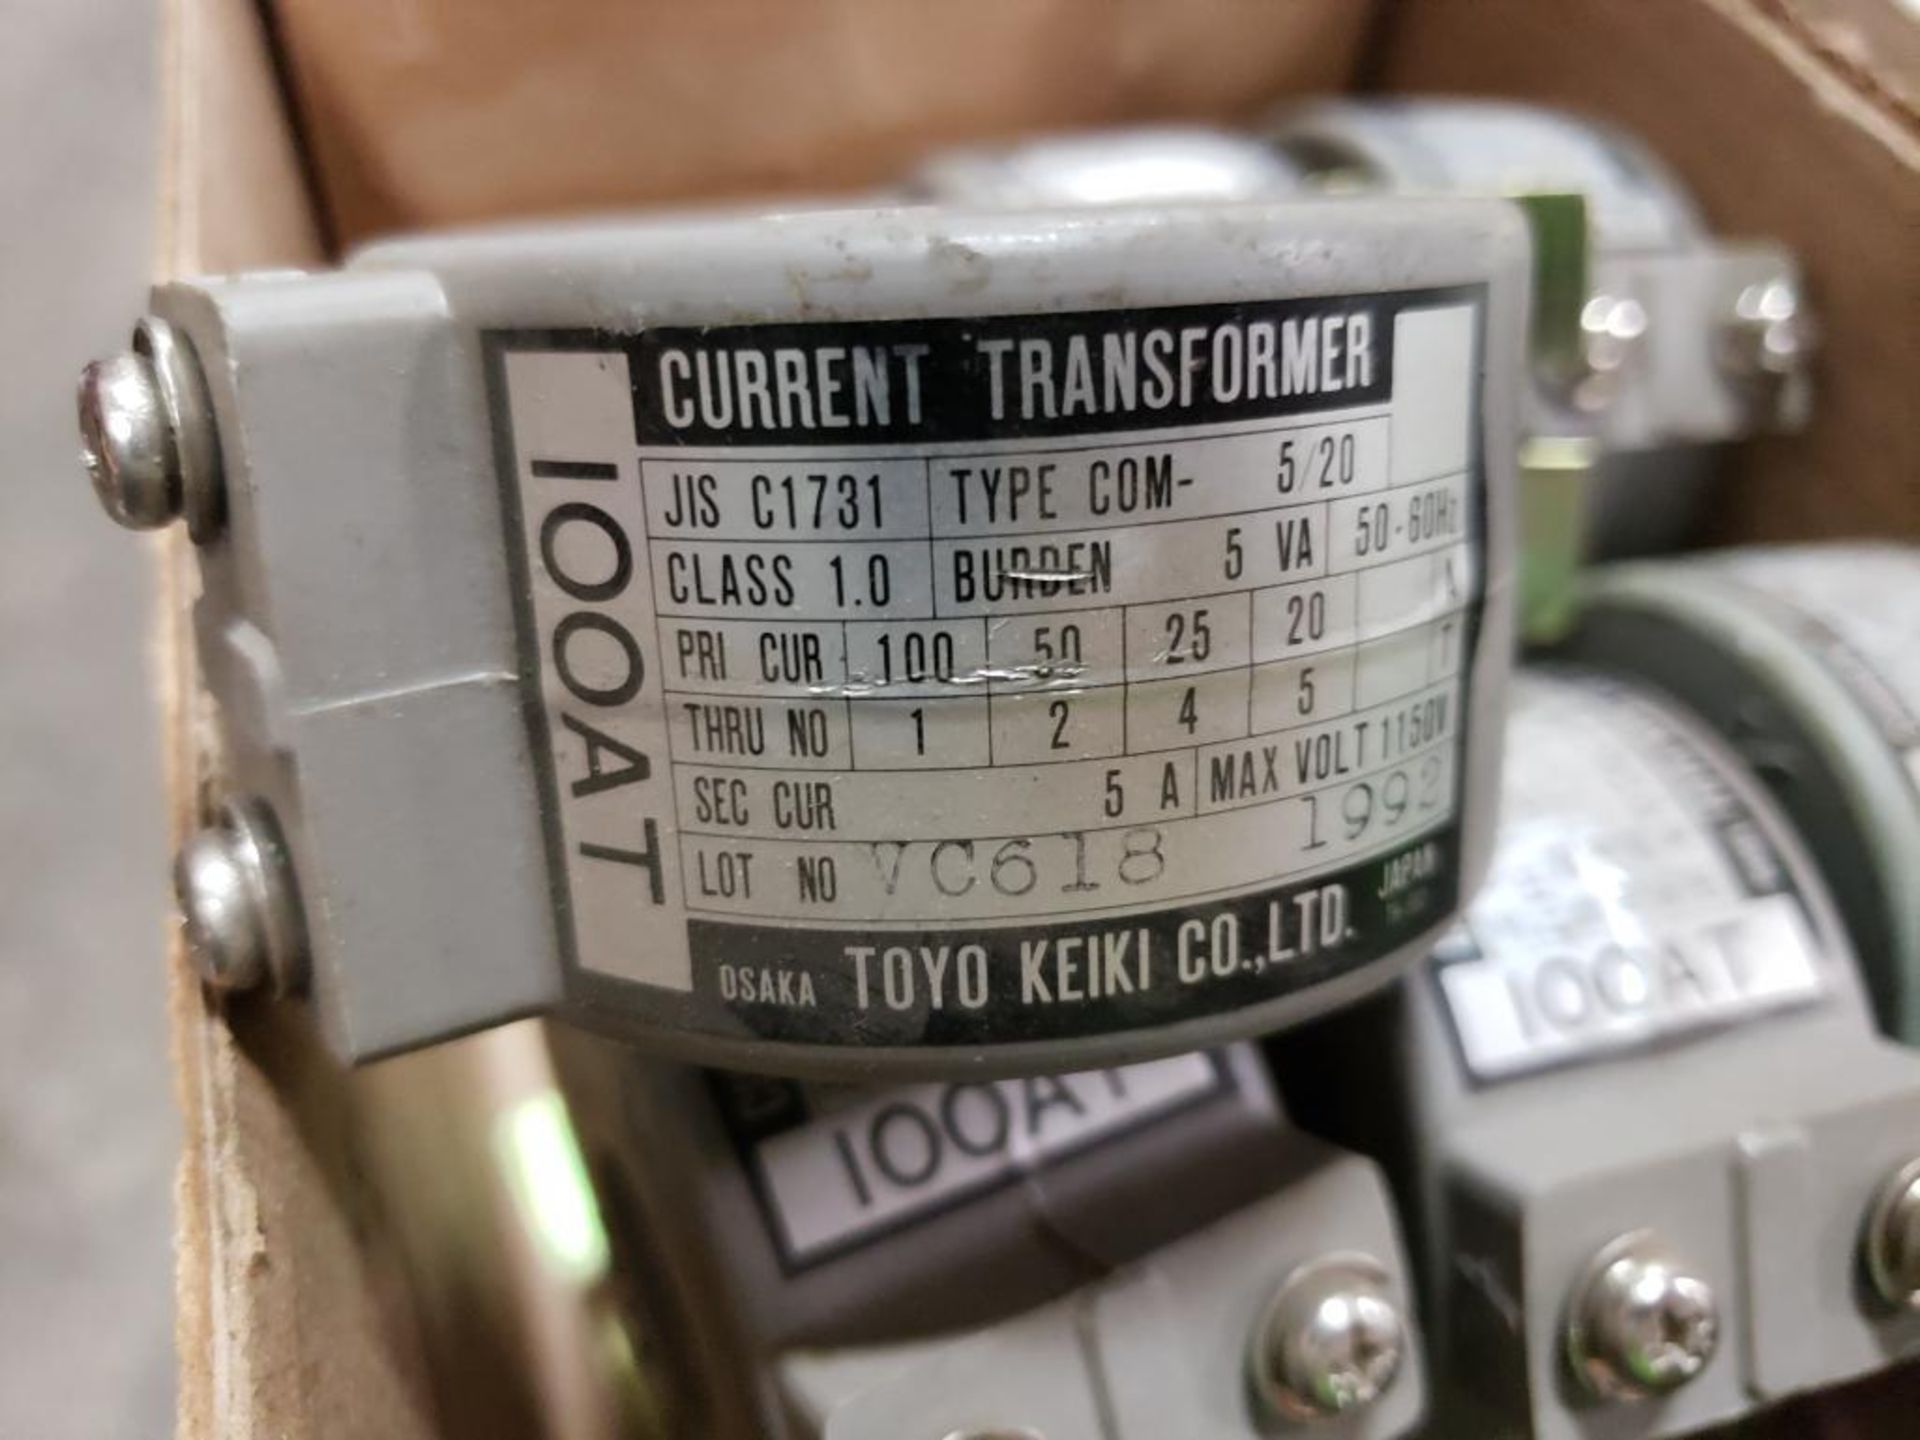 Qty 8 - NEW Toyo Keiki 100AT JIS C1731 Current Transformer USIP. - Image 5 of 6